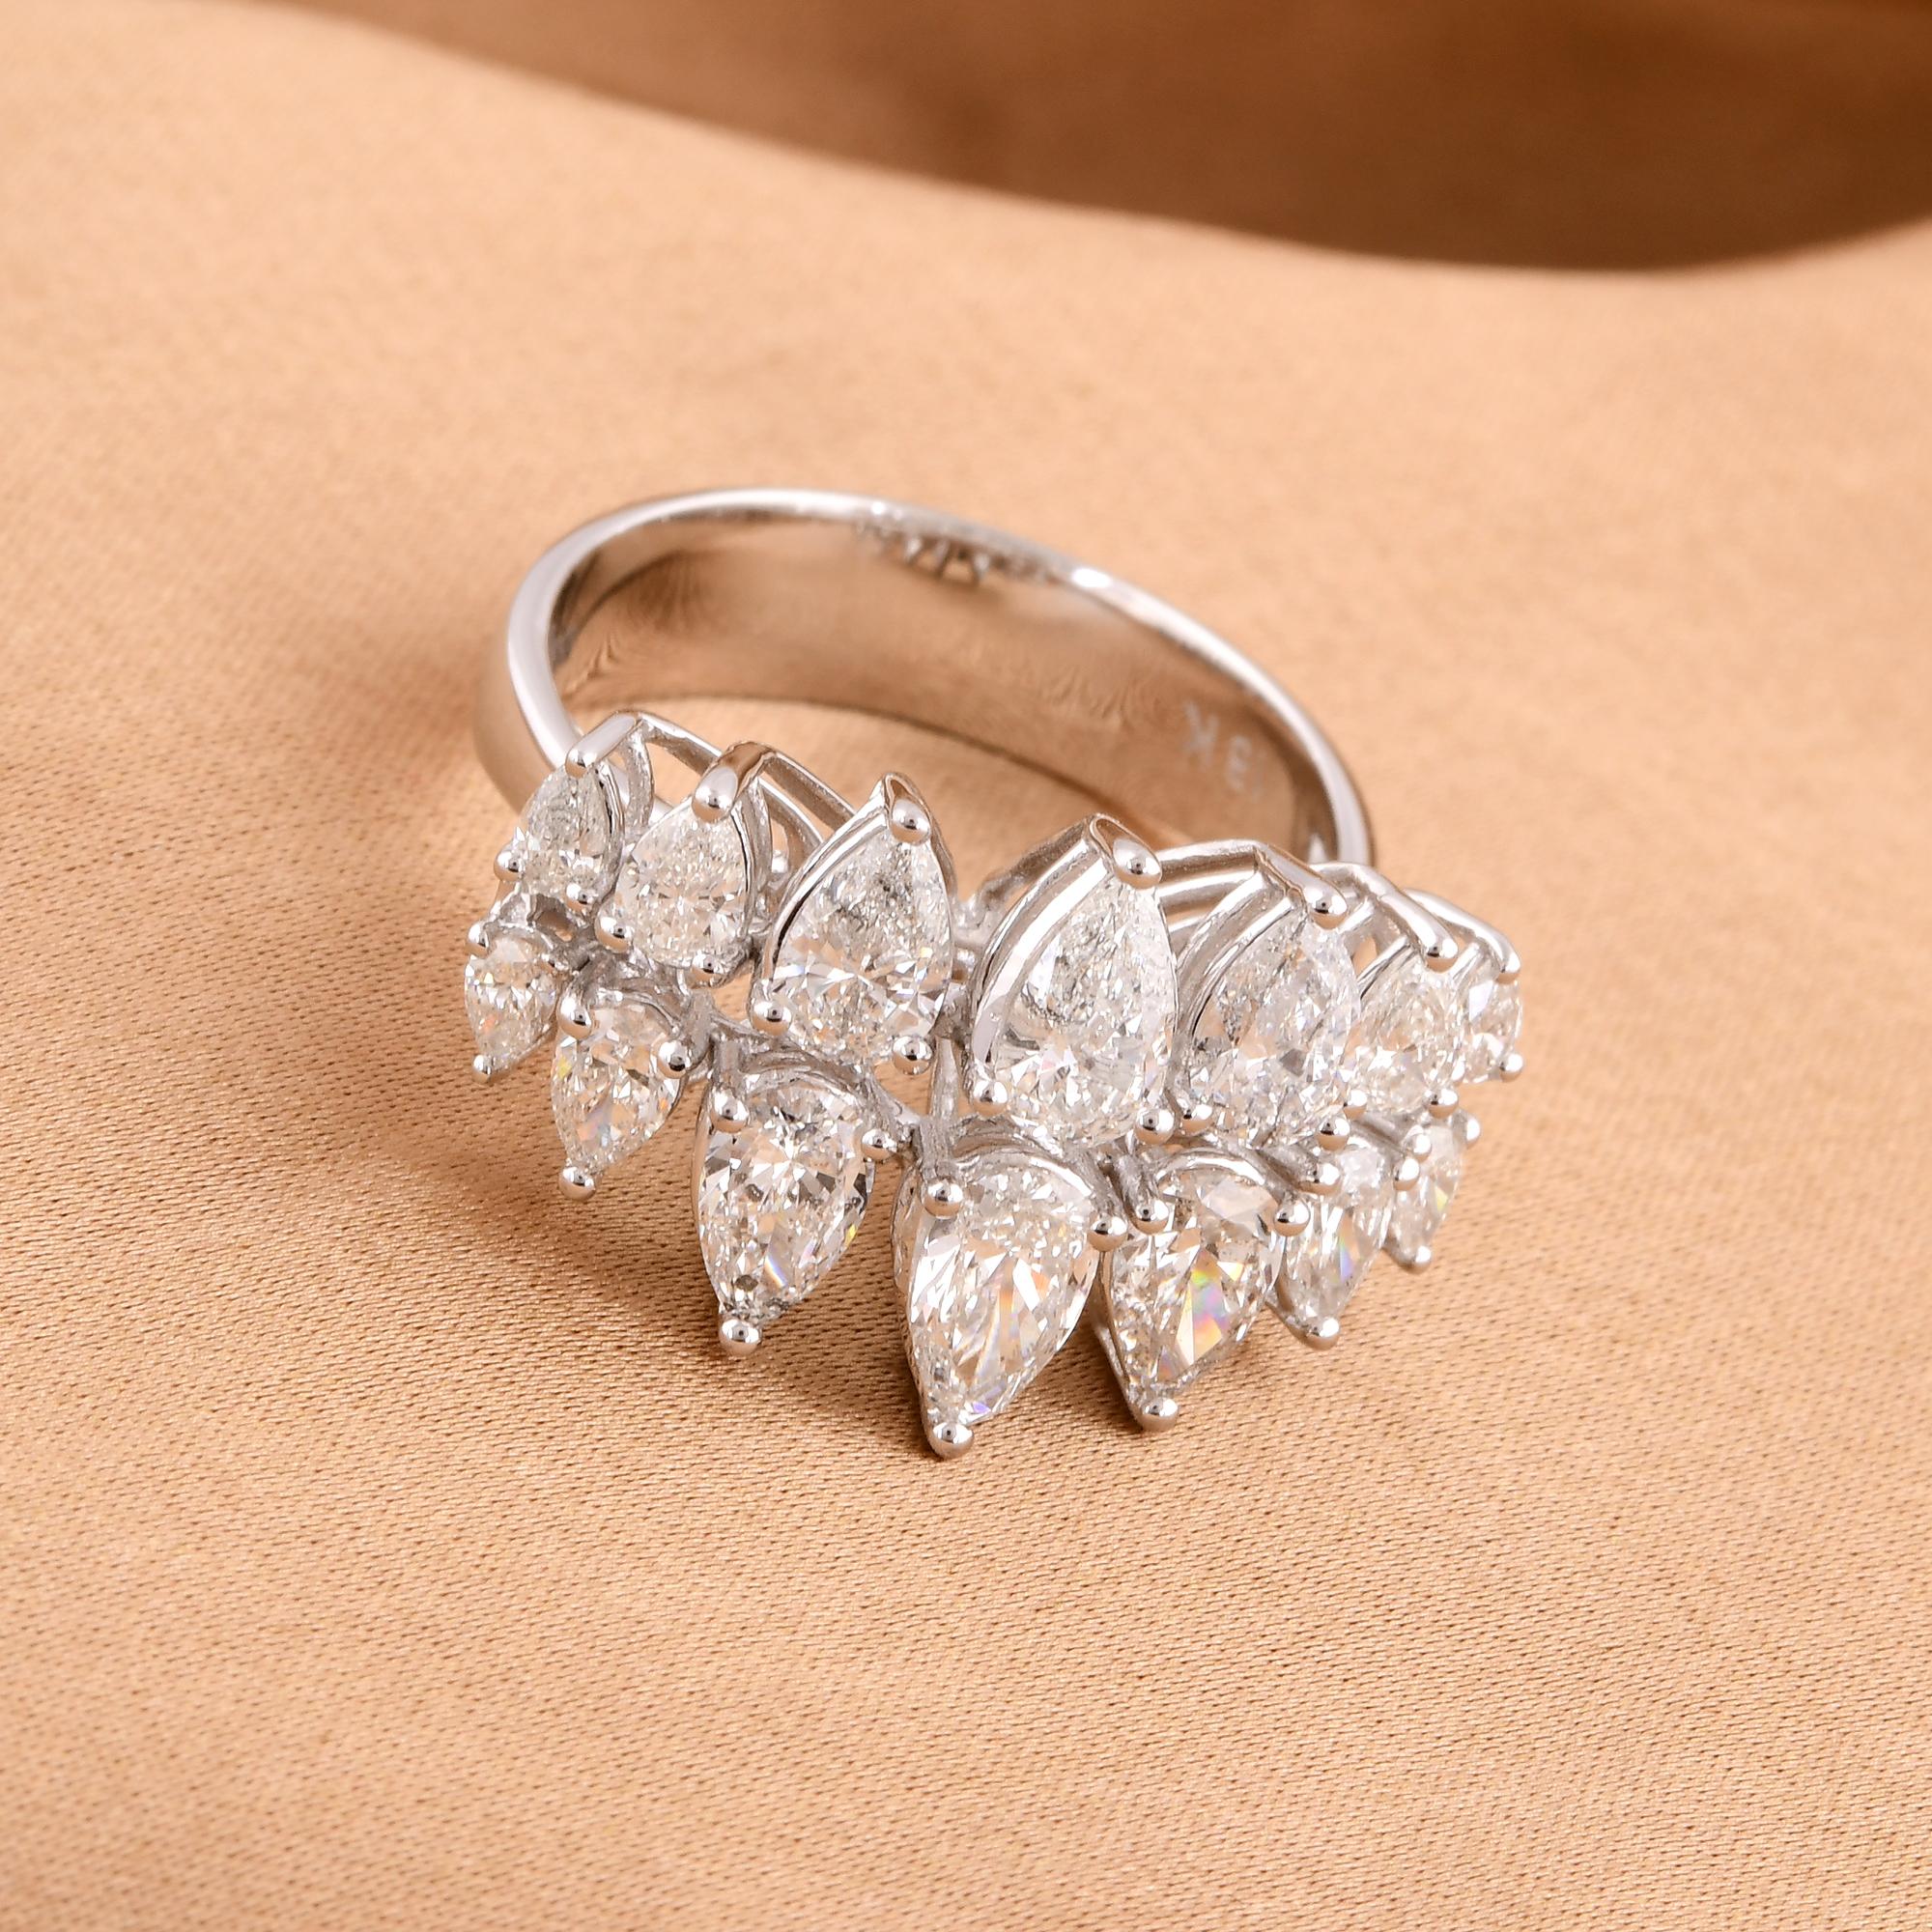 Modern 2.36 Carat Pear Shape Diamond Ring 18 Karat White Gold Handmade Fine Jewelry For Sale